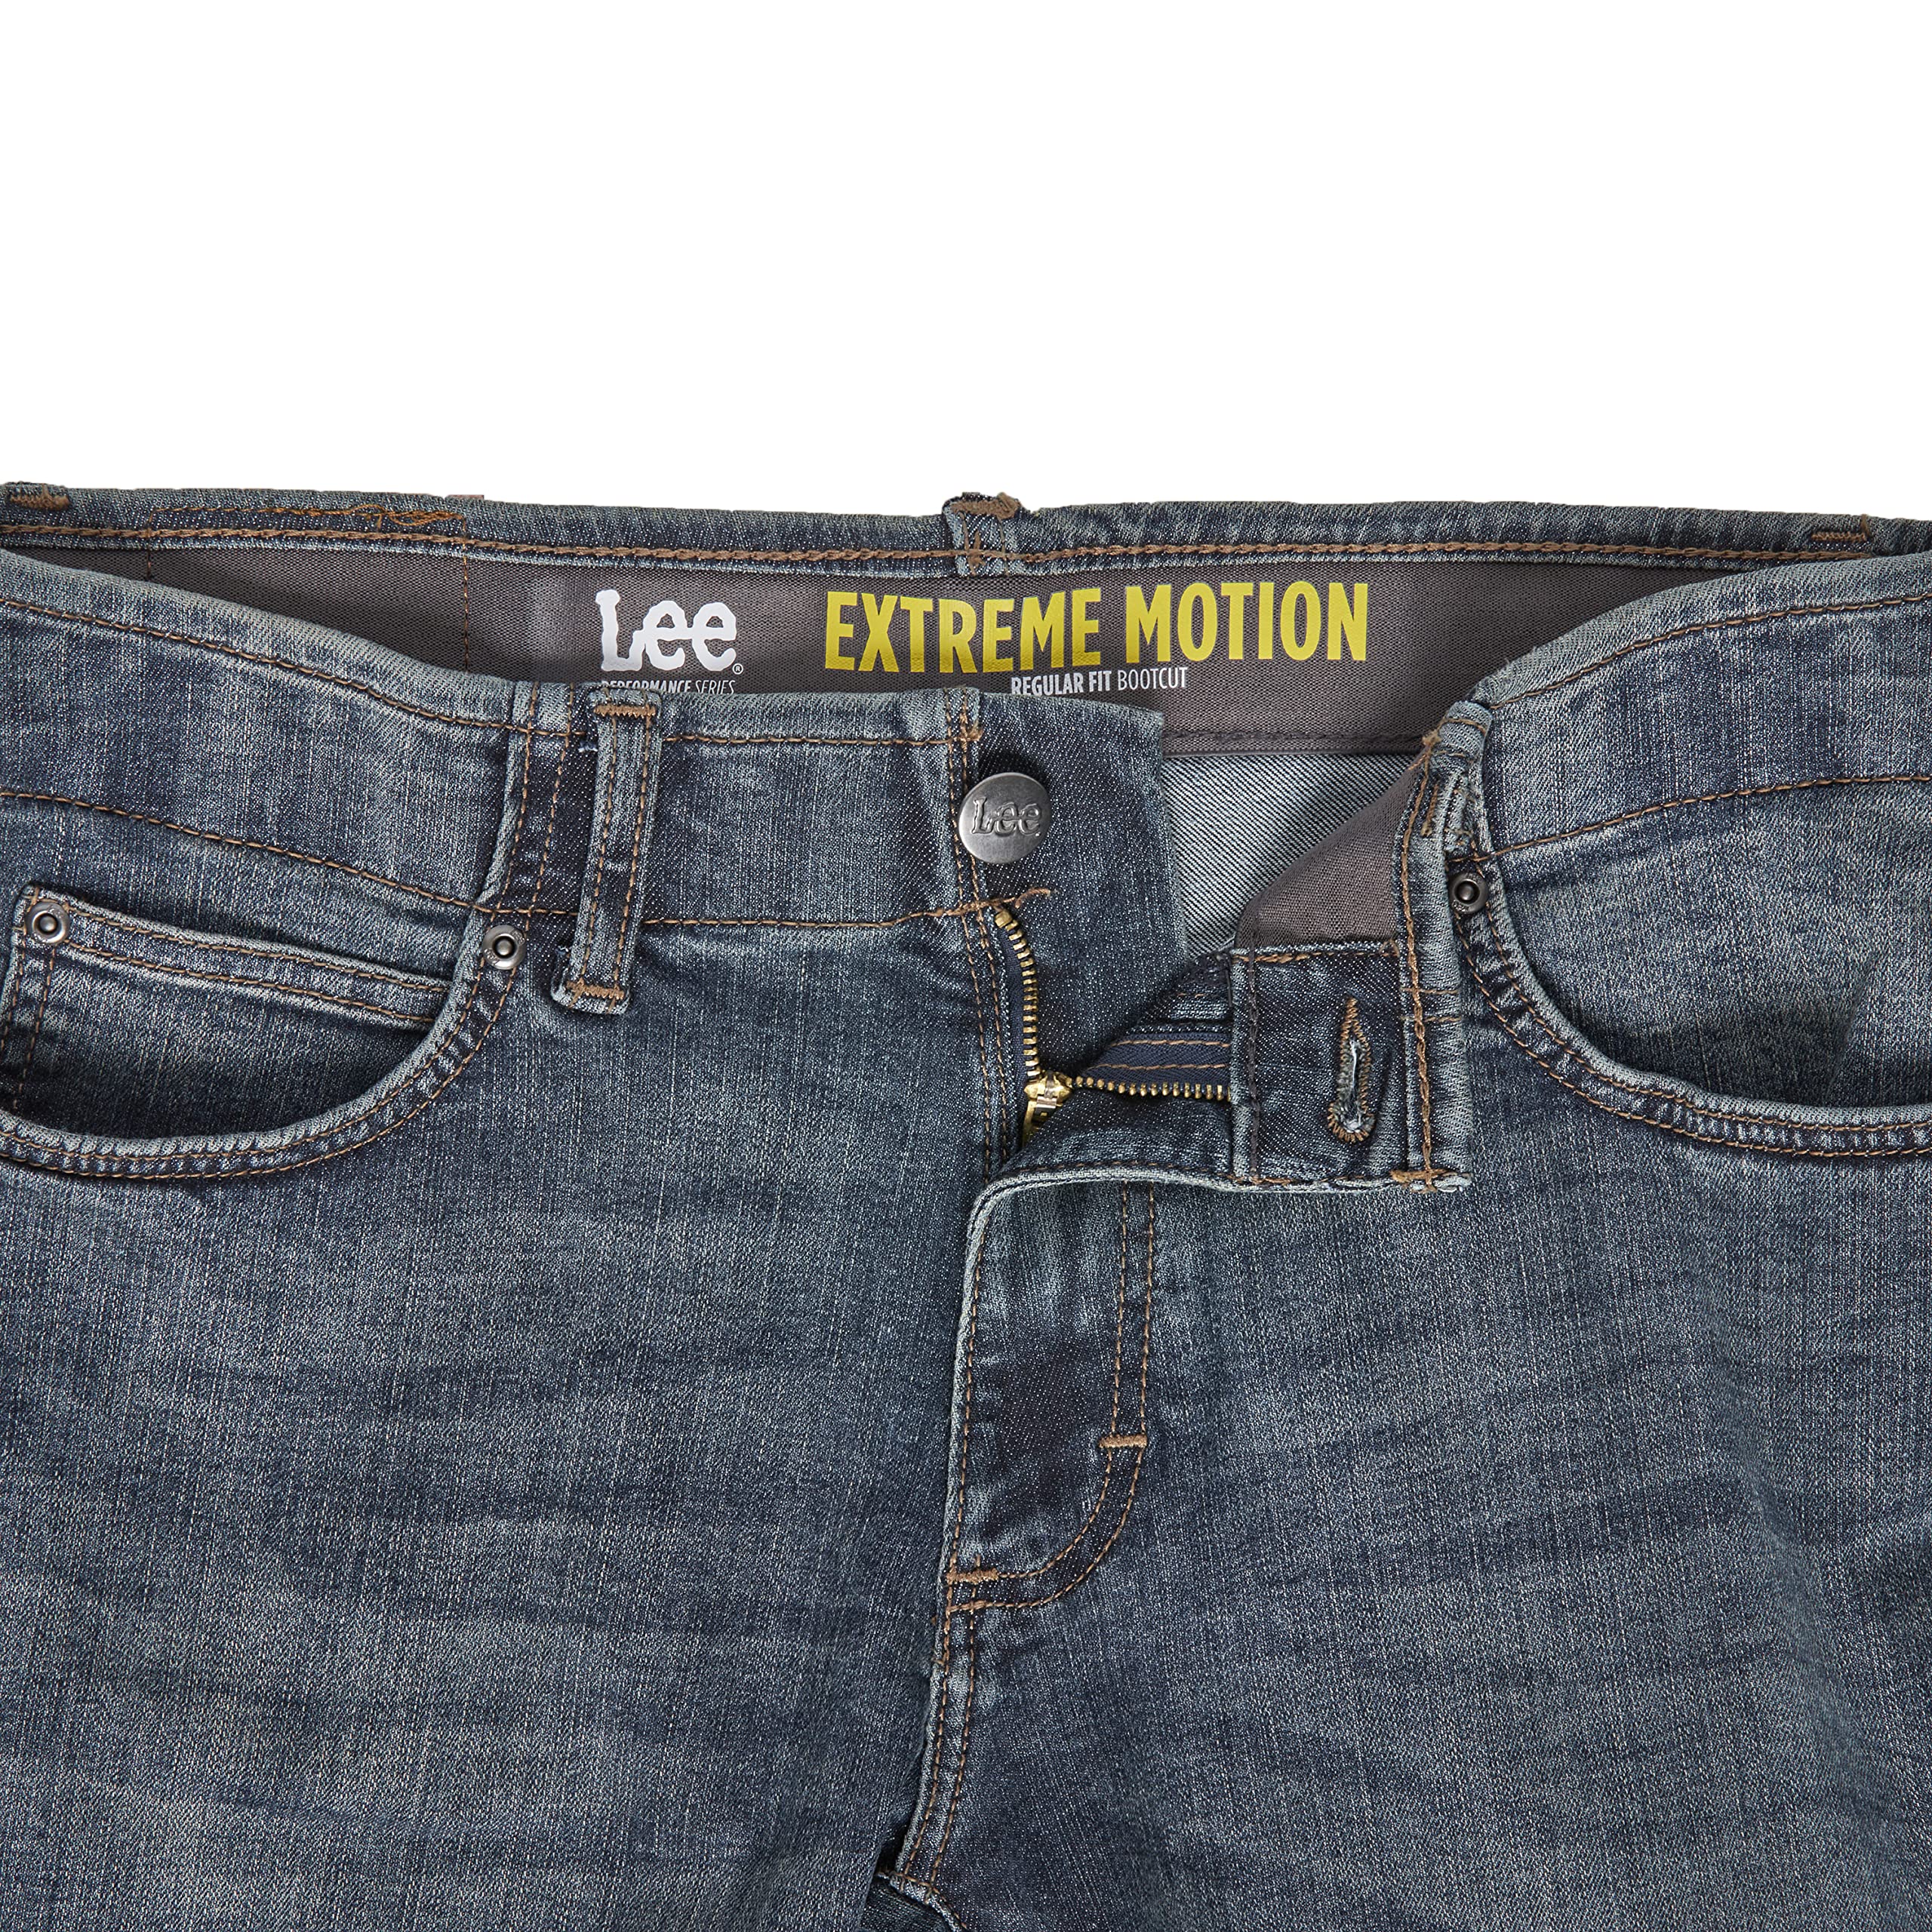 Lee Men's Extreme Motion Regular Boot Jean